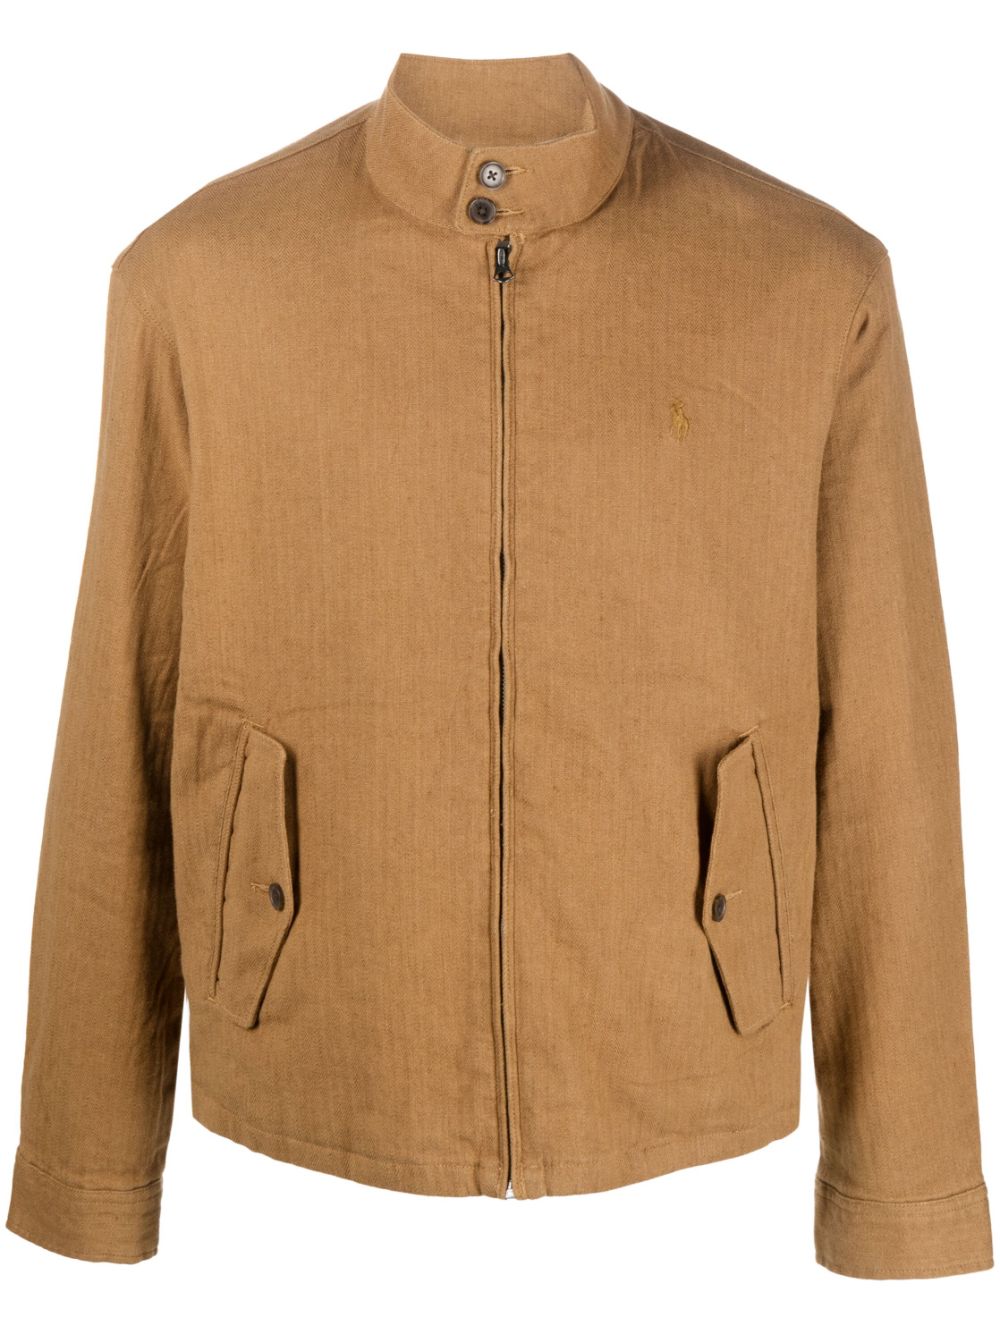 Polo Ralph Lauren stand-up collar shirt jacket - Brown von Polo Ralph Lauren